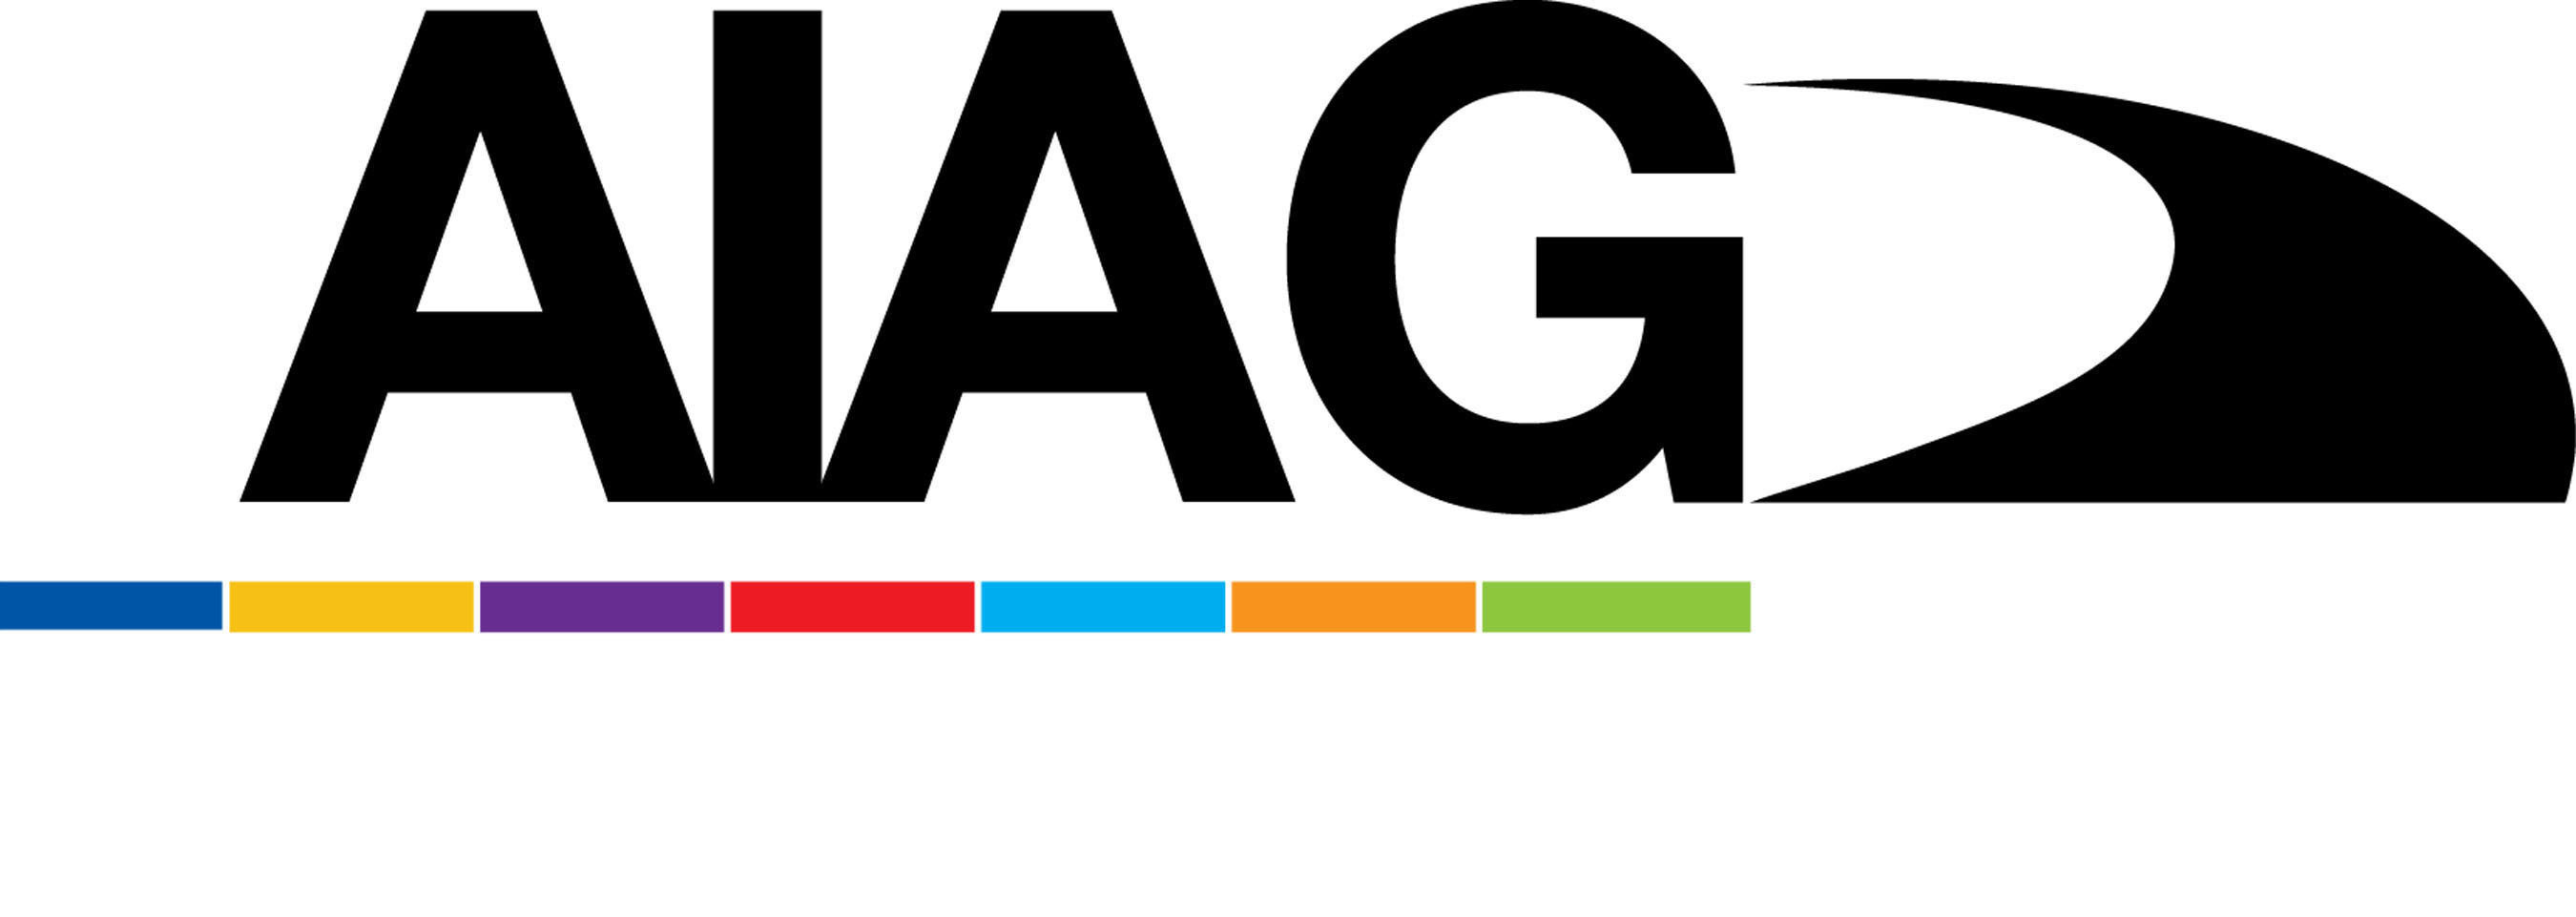 AIM is an AIAG member since 1982